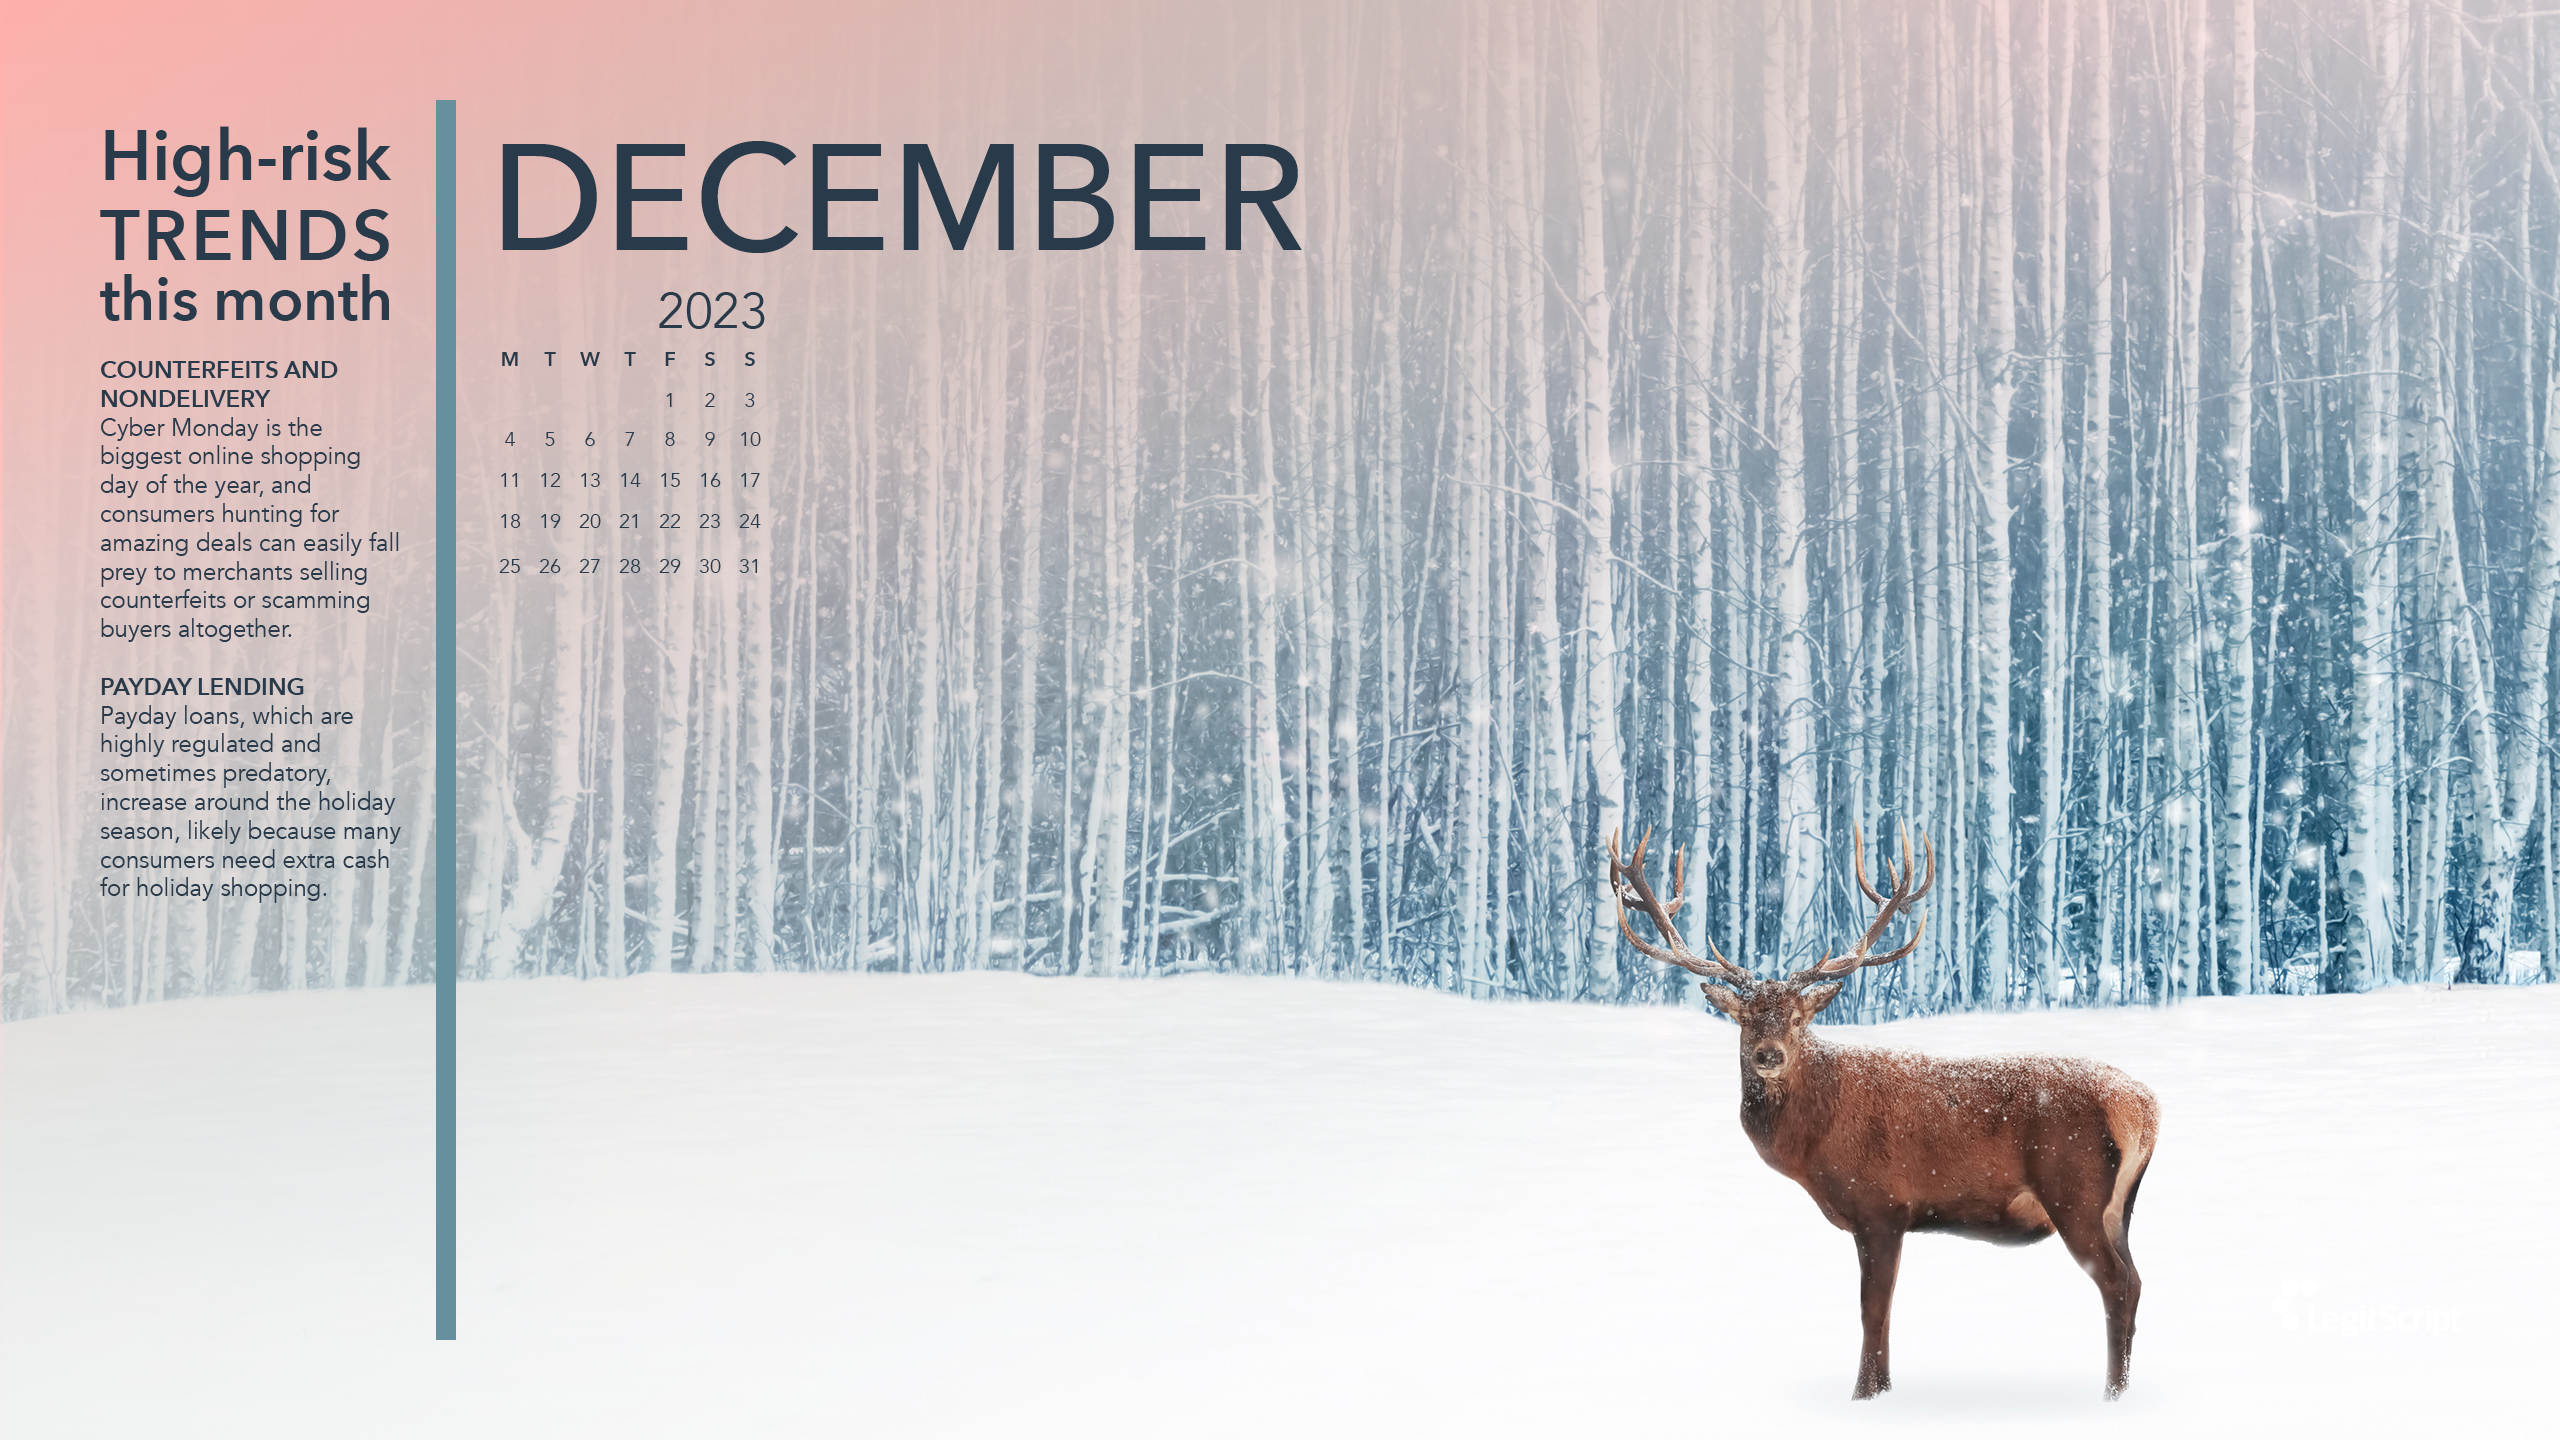 Seasonal High Risk Trends desktop background for December.